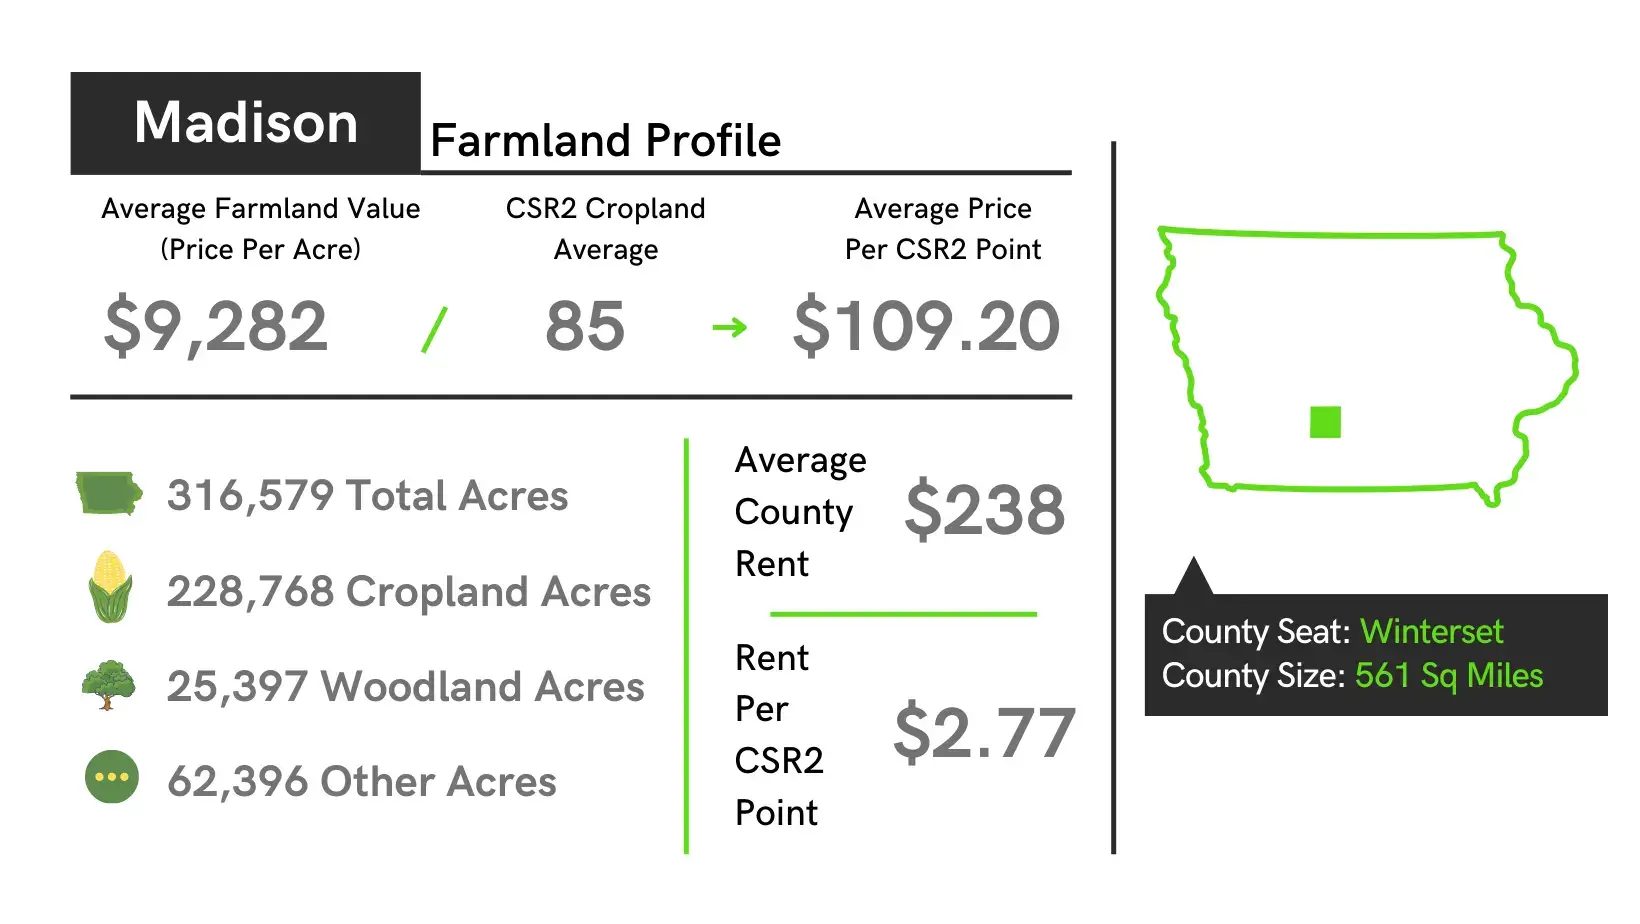 Madison County Farmland Profile